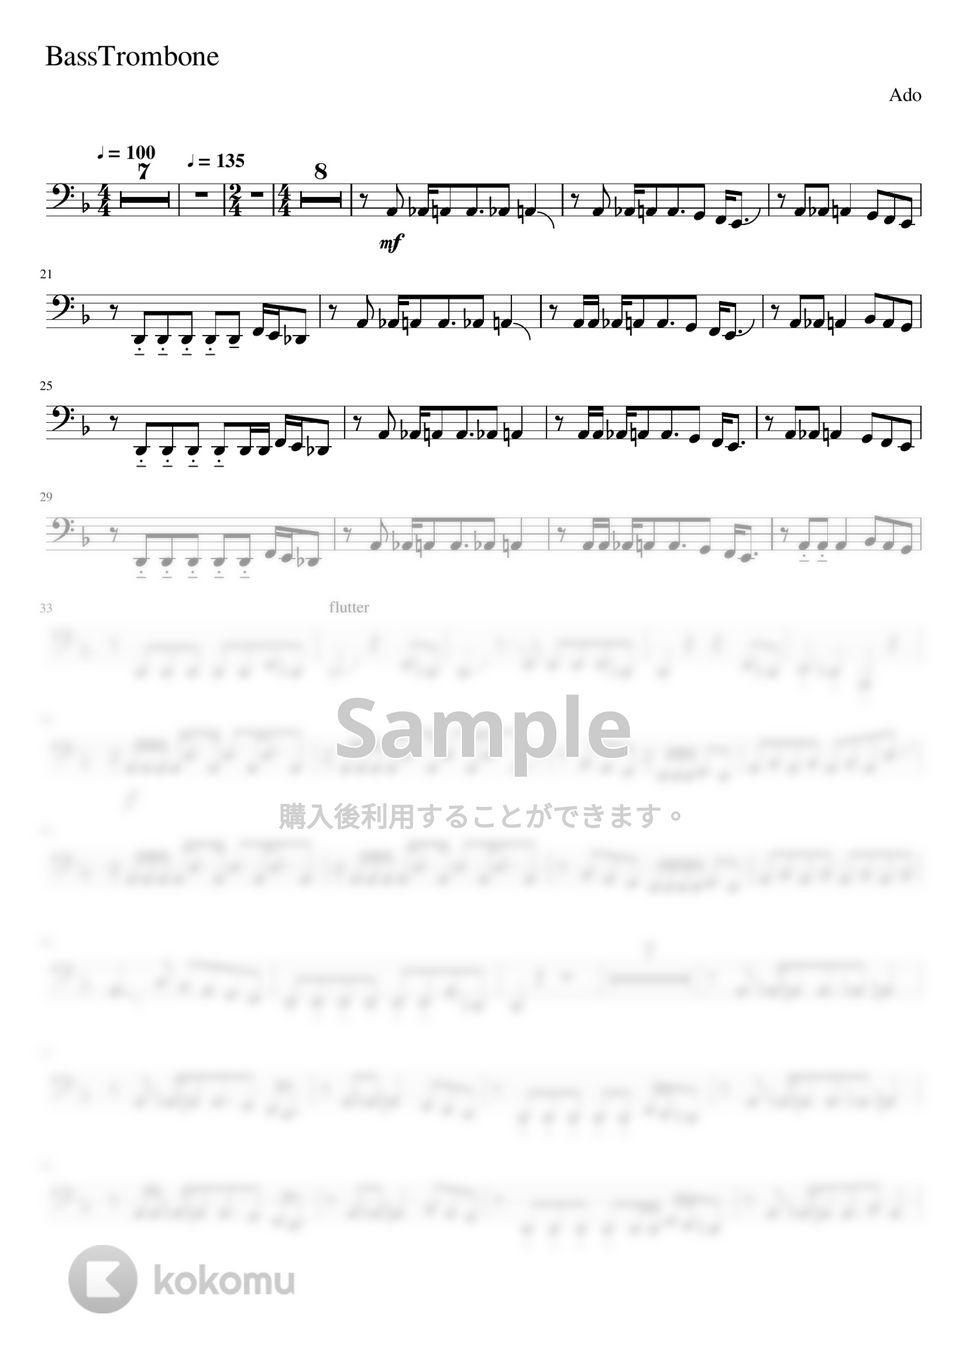 Ado - ラブカ？ (-Bass Trombone Solo- 原キー) by Creampuff